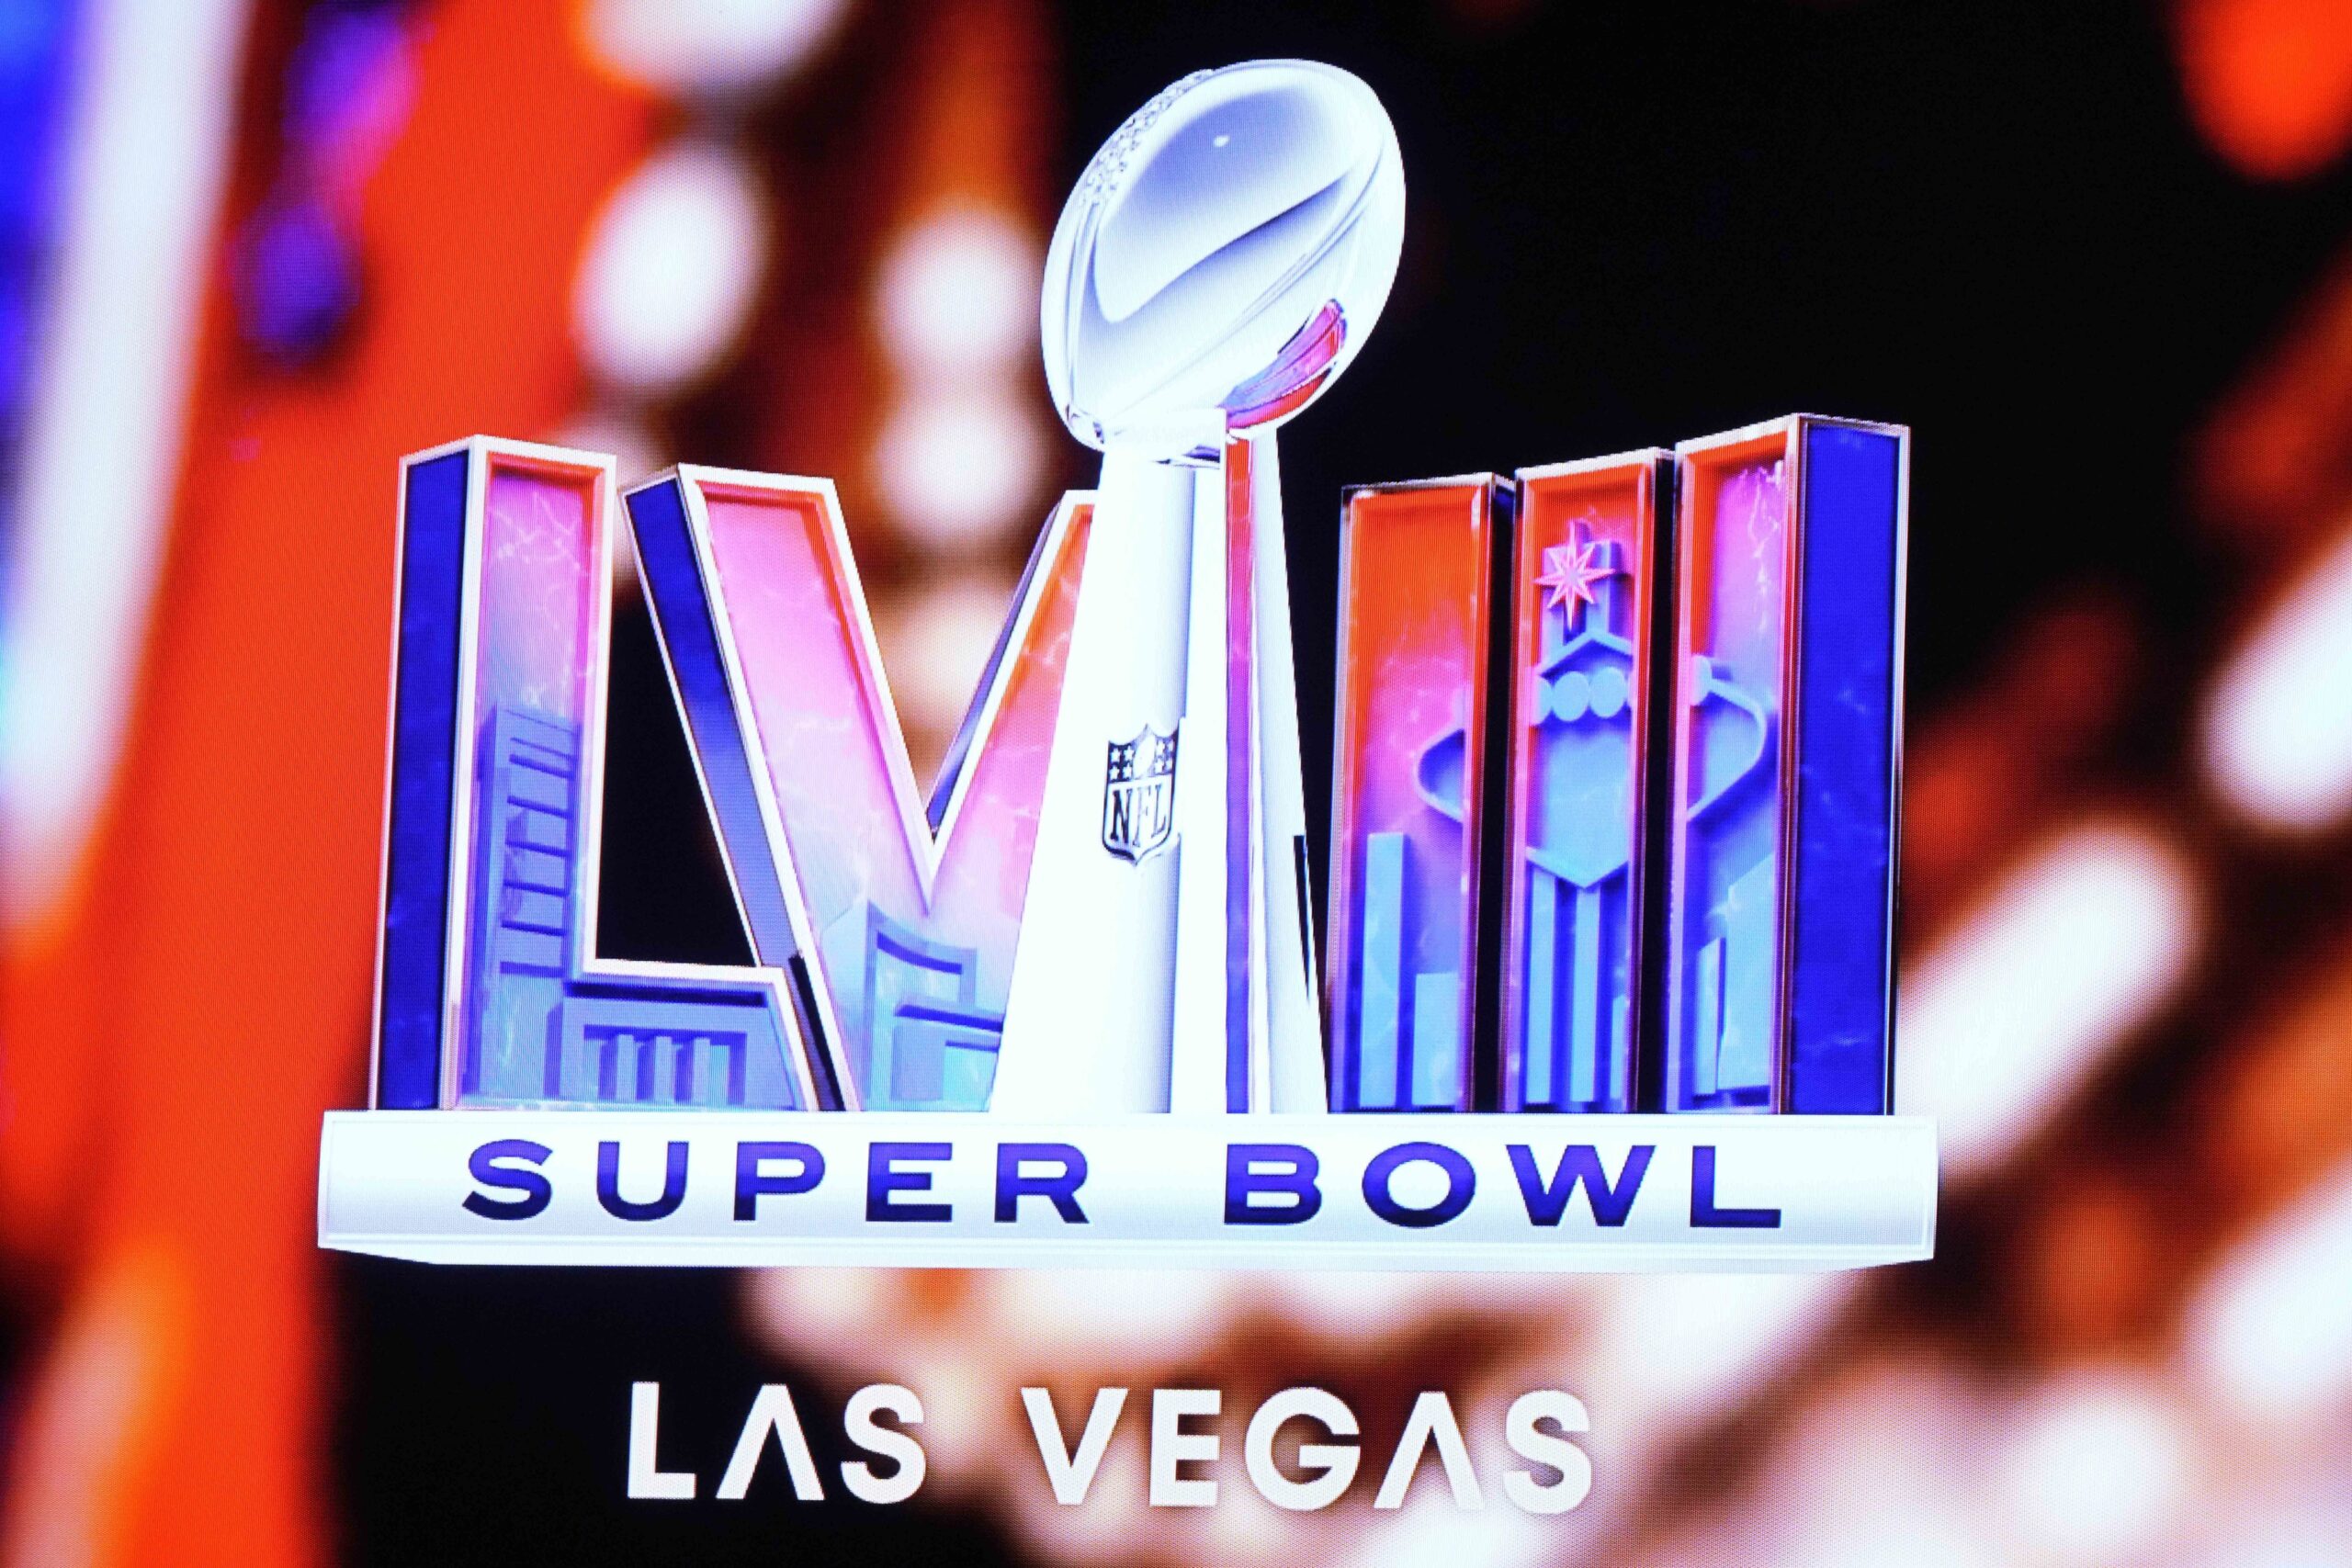 Super Bowl LVIII week in Las Vegas event schedule released